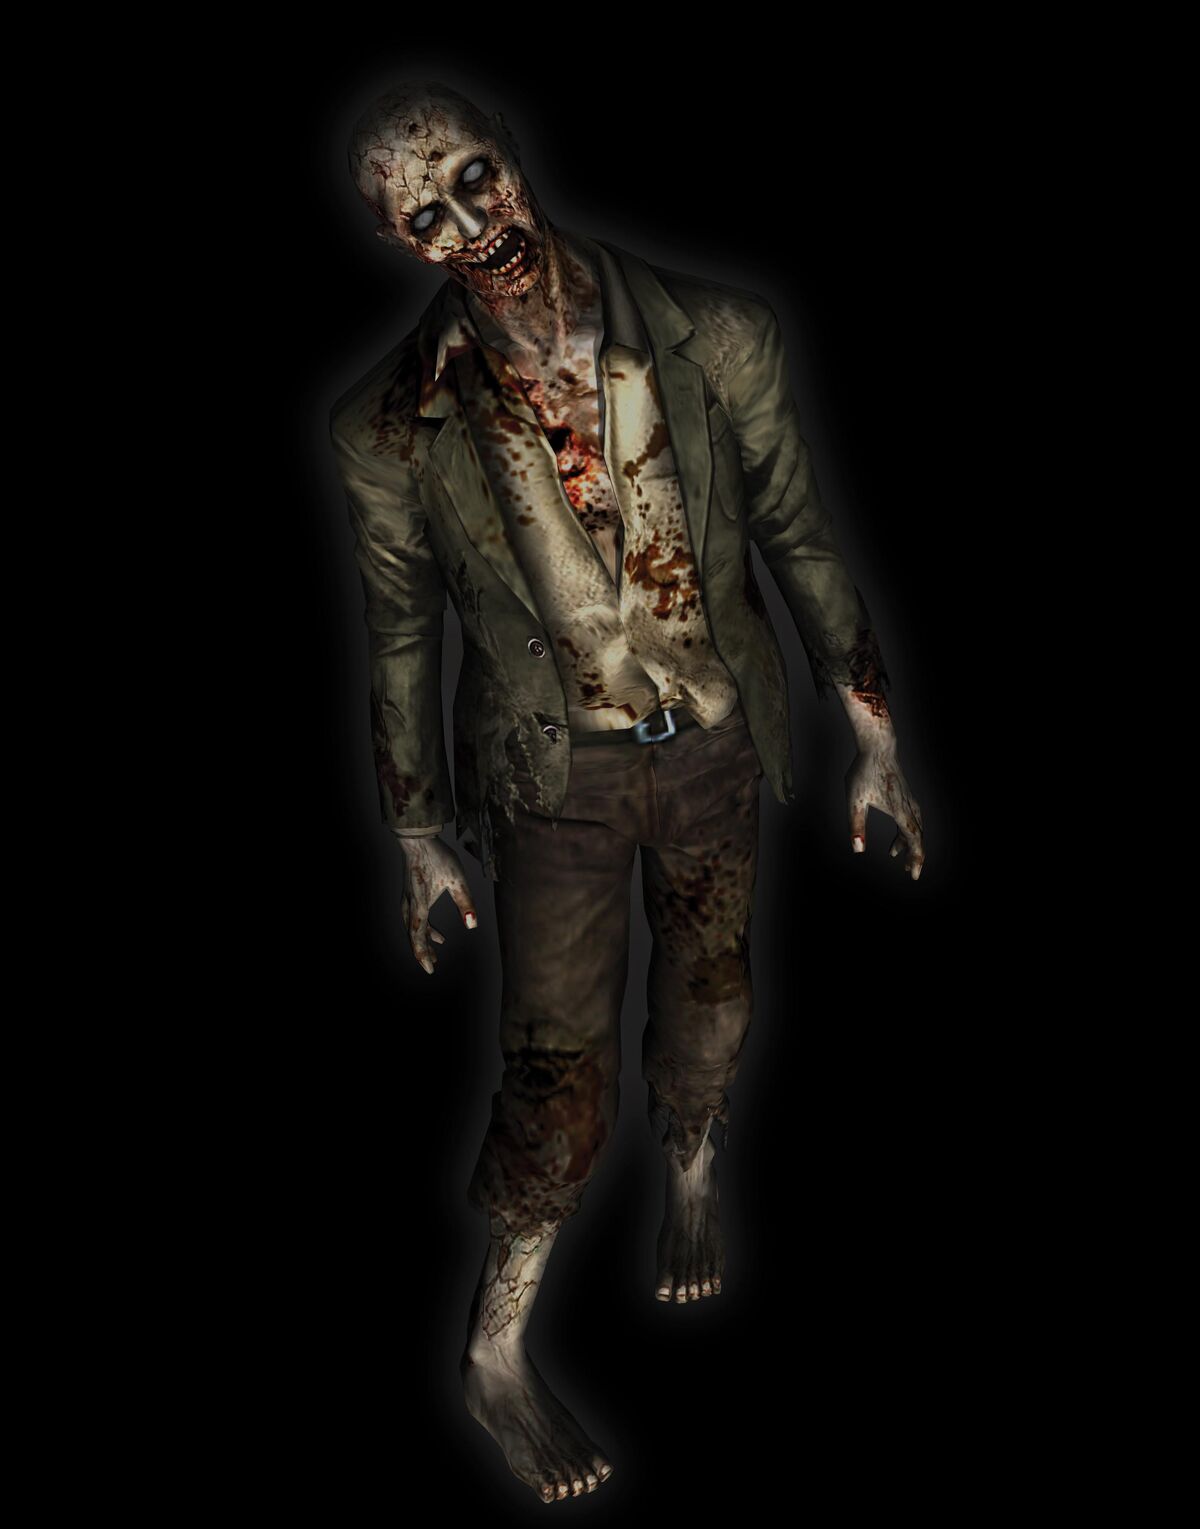 Zombie - Wikipedia